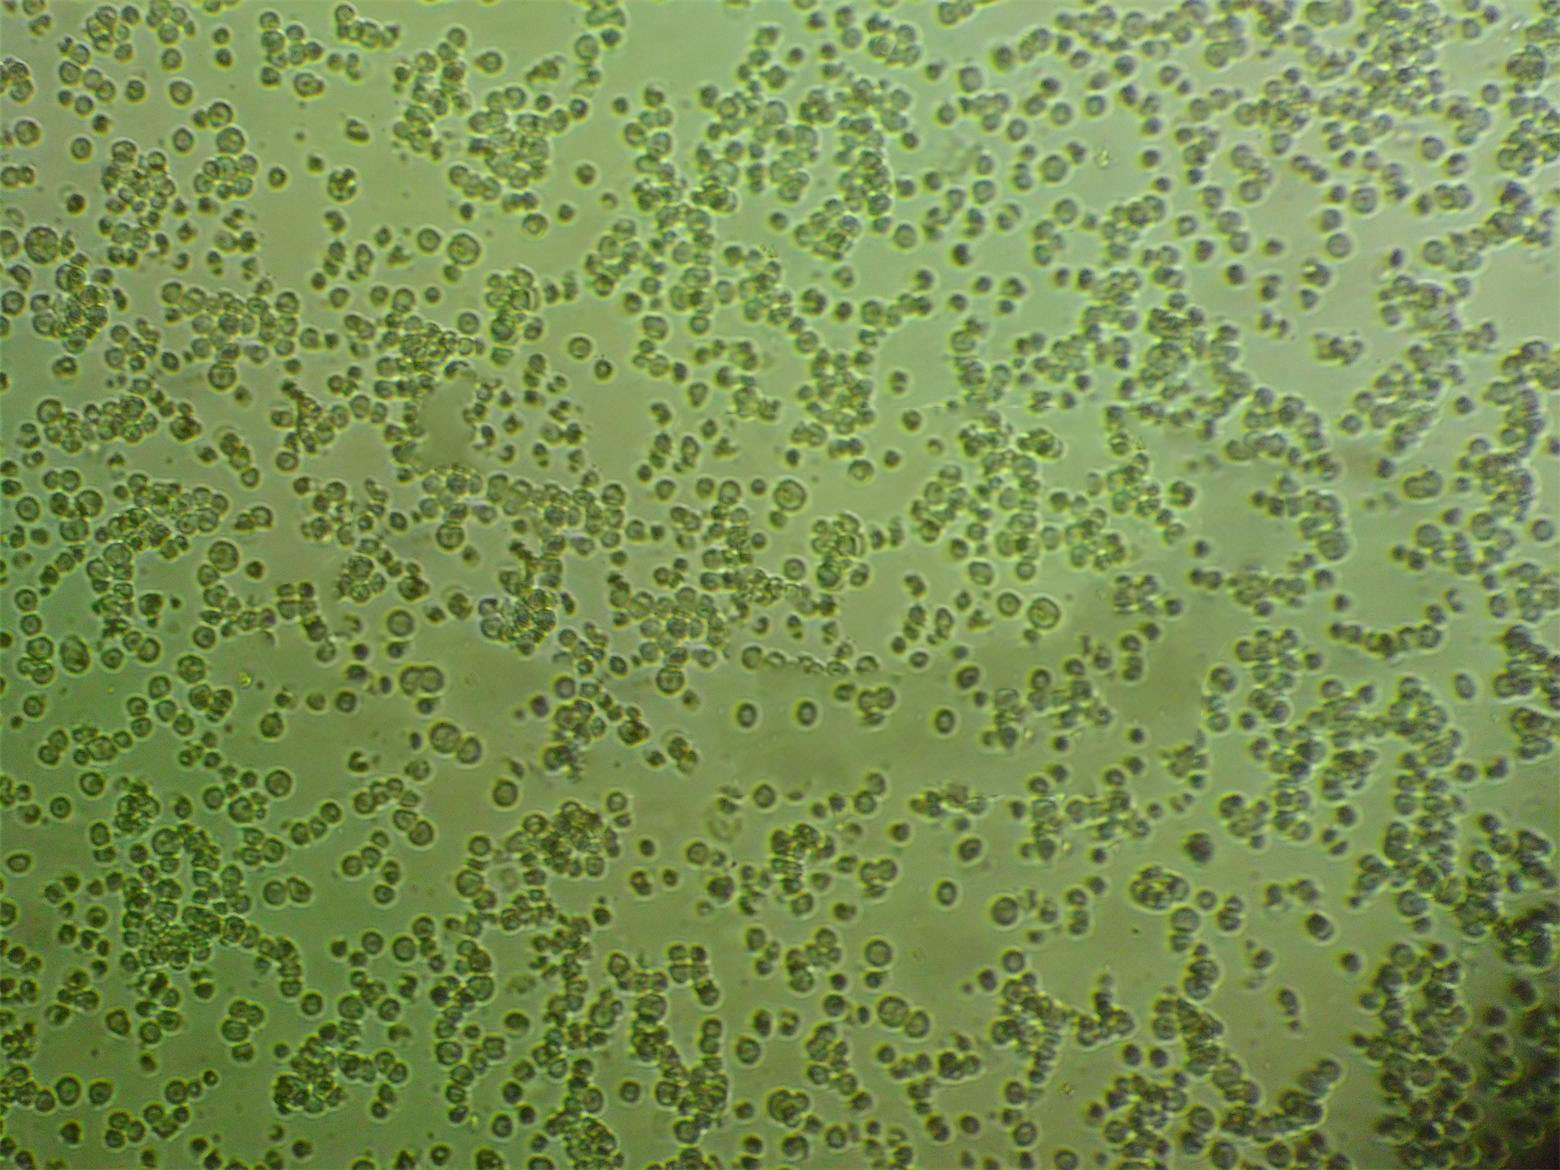 SU-DHL-1 Cells|人间变性大细胞淋巴瘤可传代细胞系